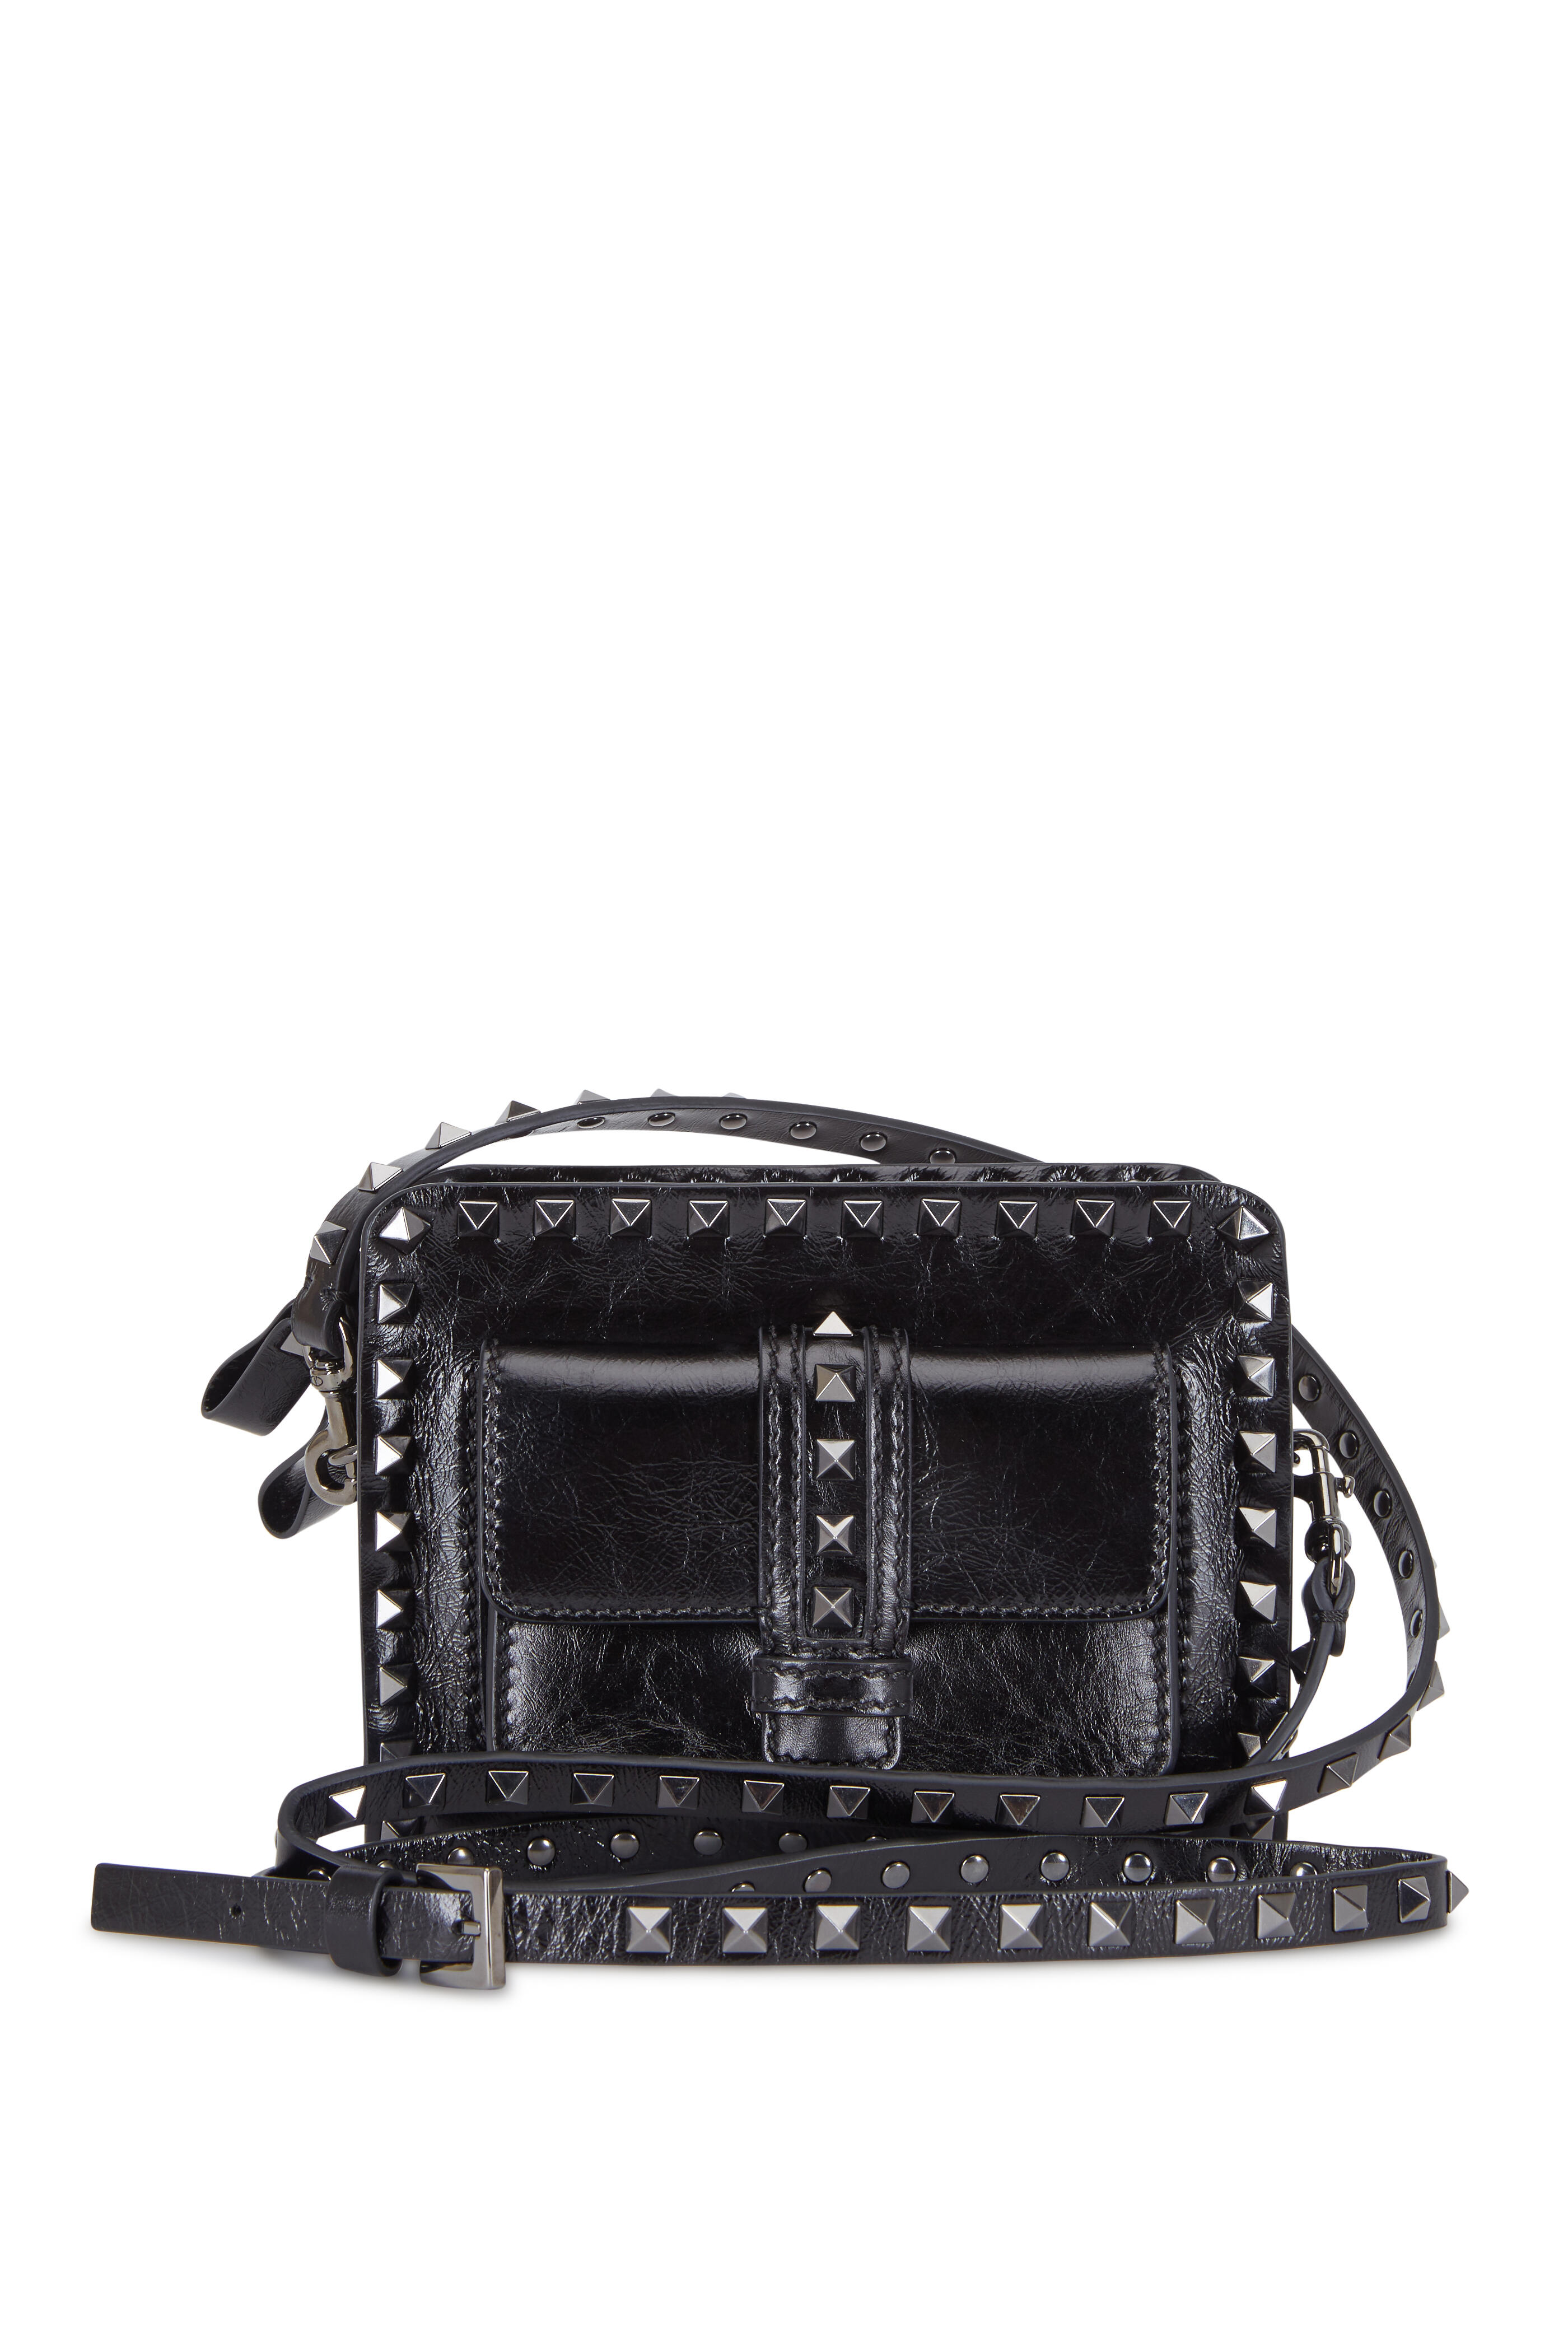 Valentino Rockstud Leather Crossbody Bag Black